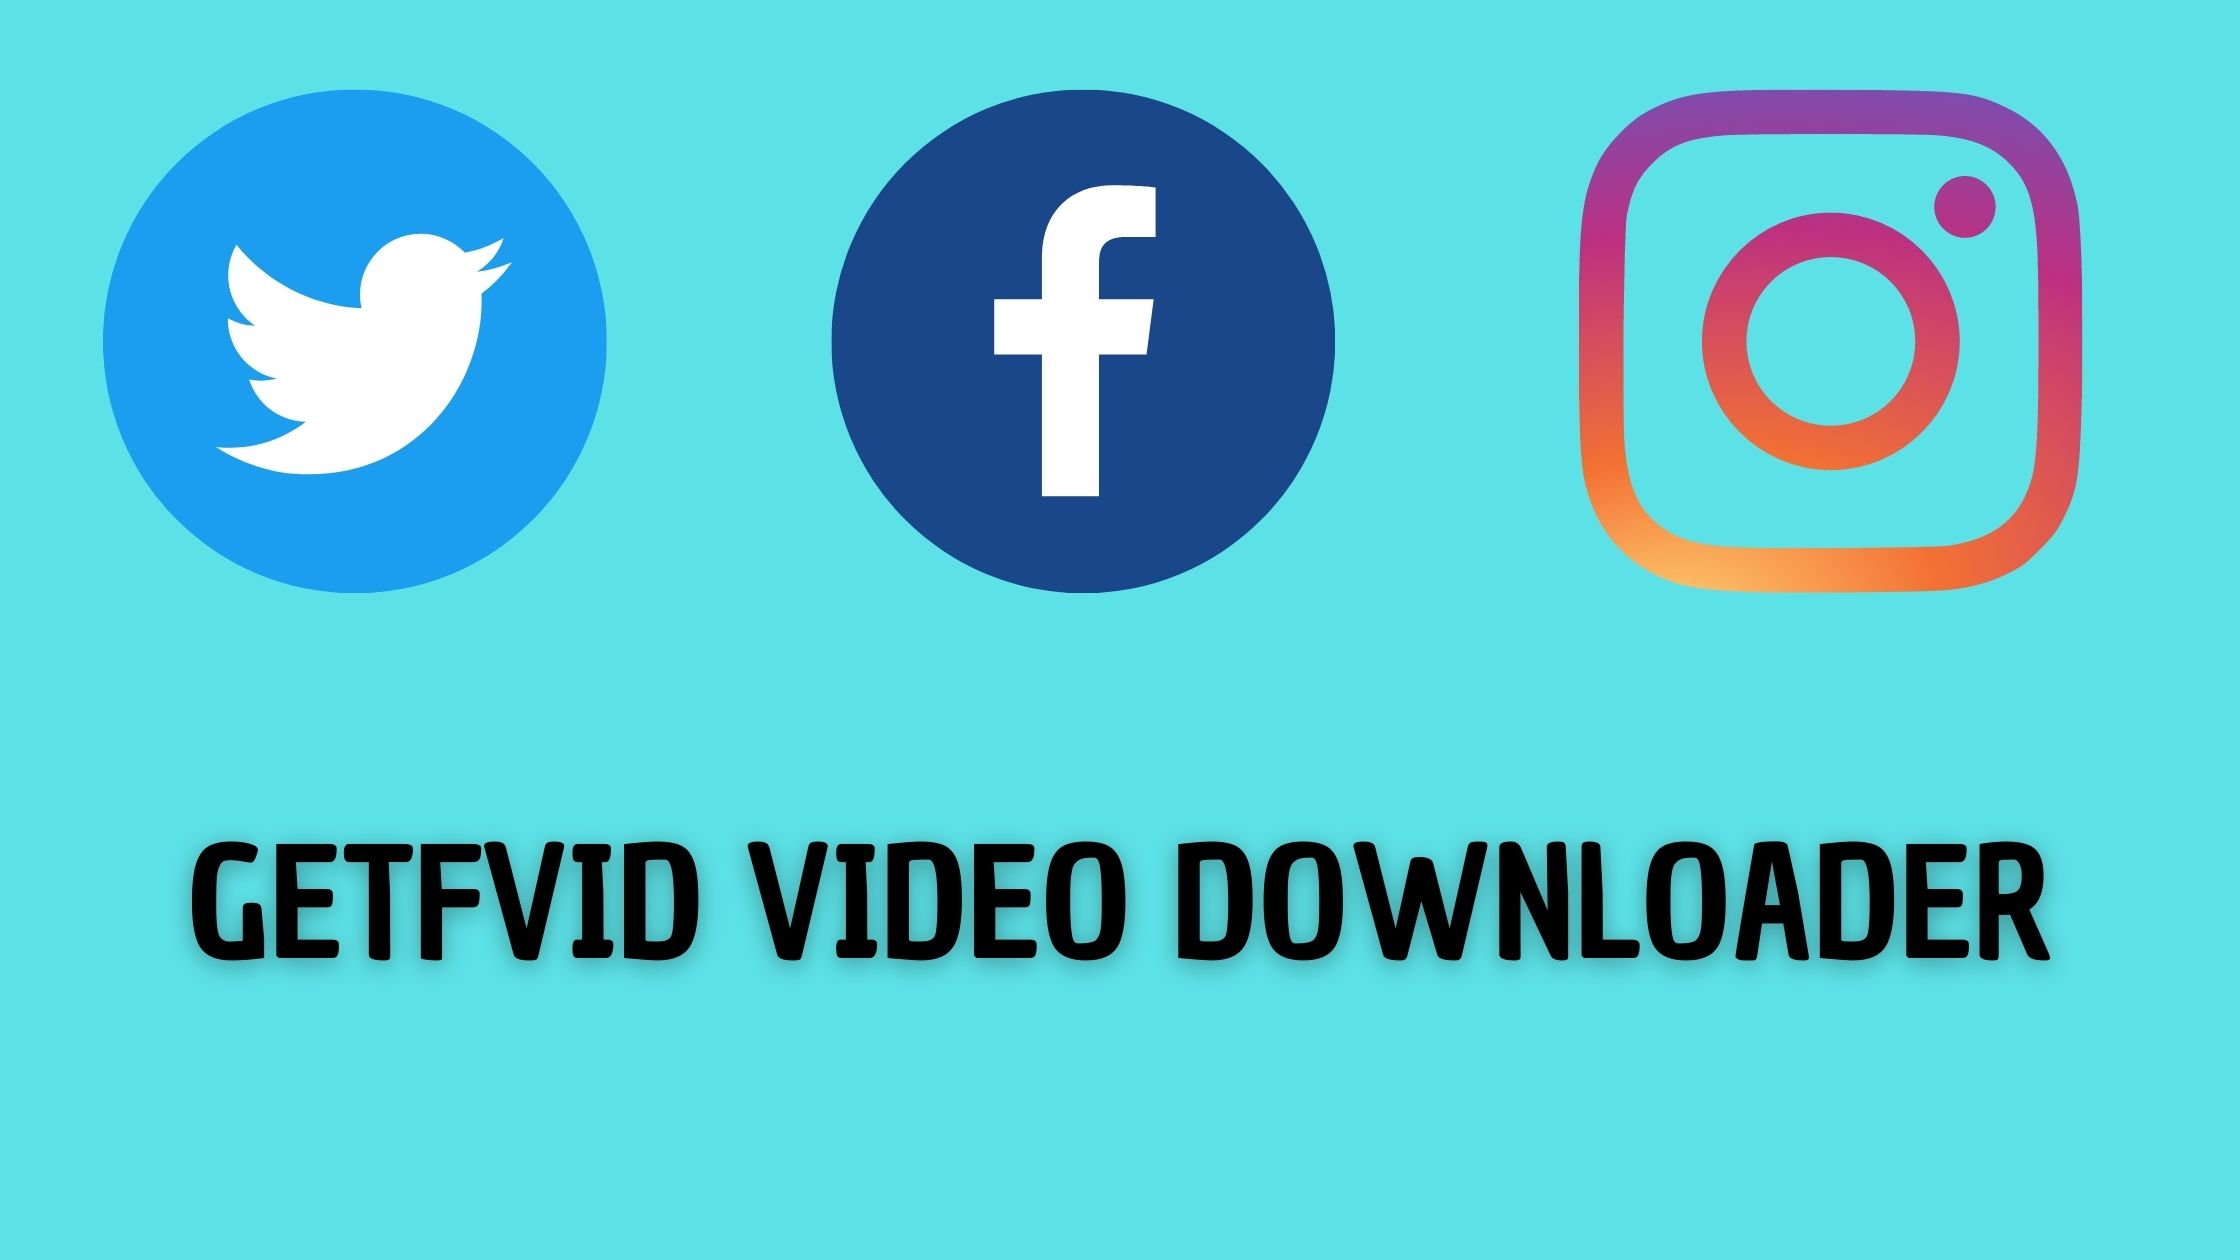 getfvid facebook video download chrome